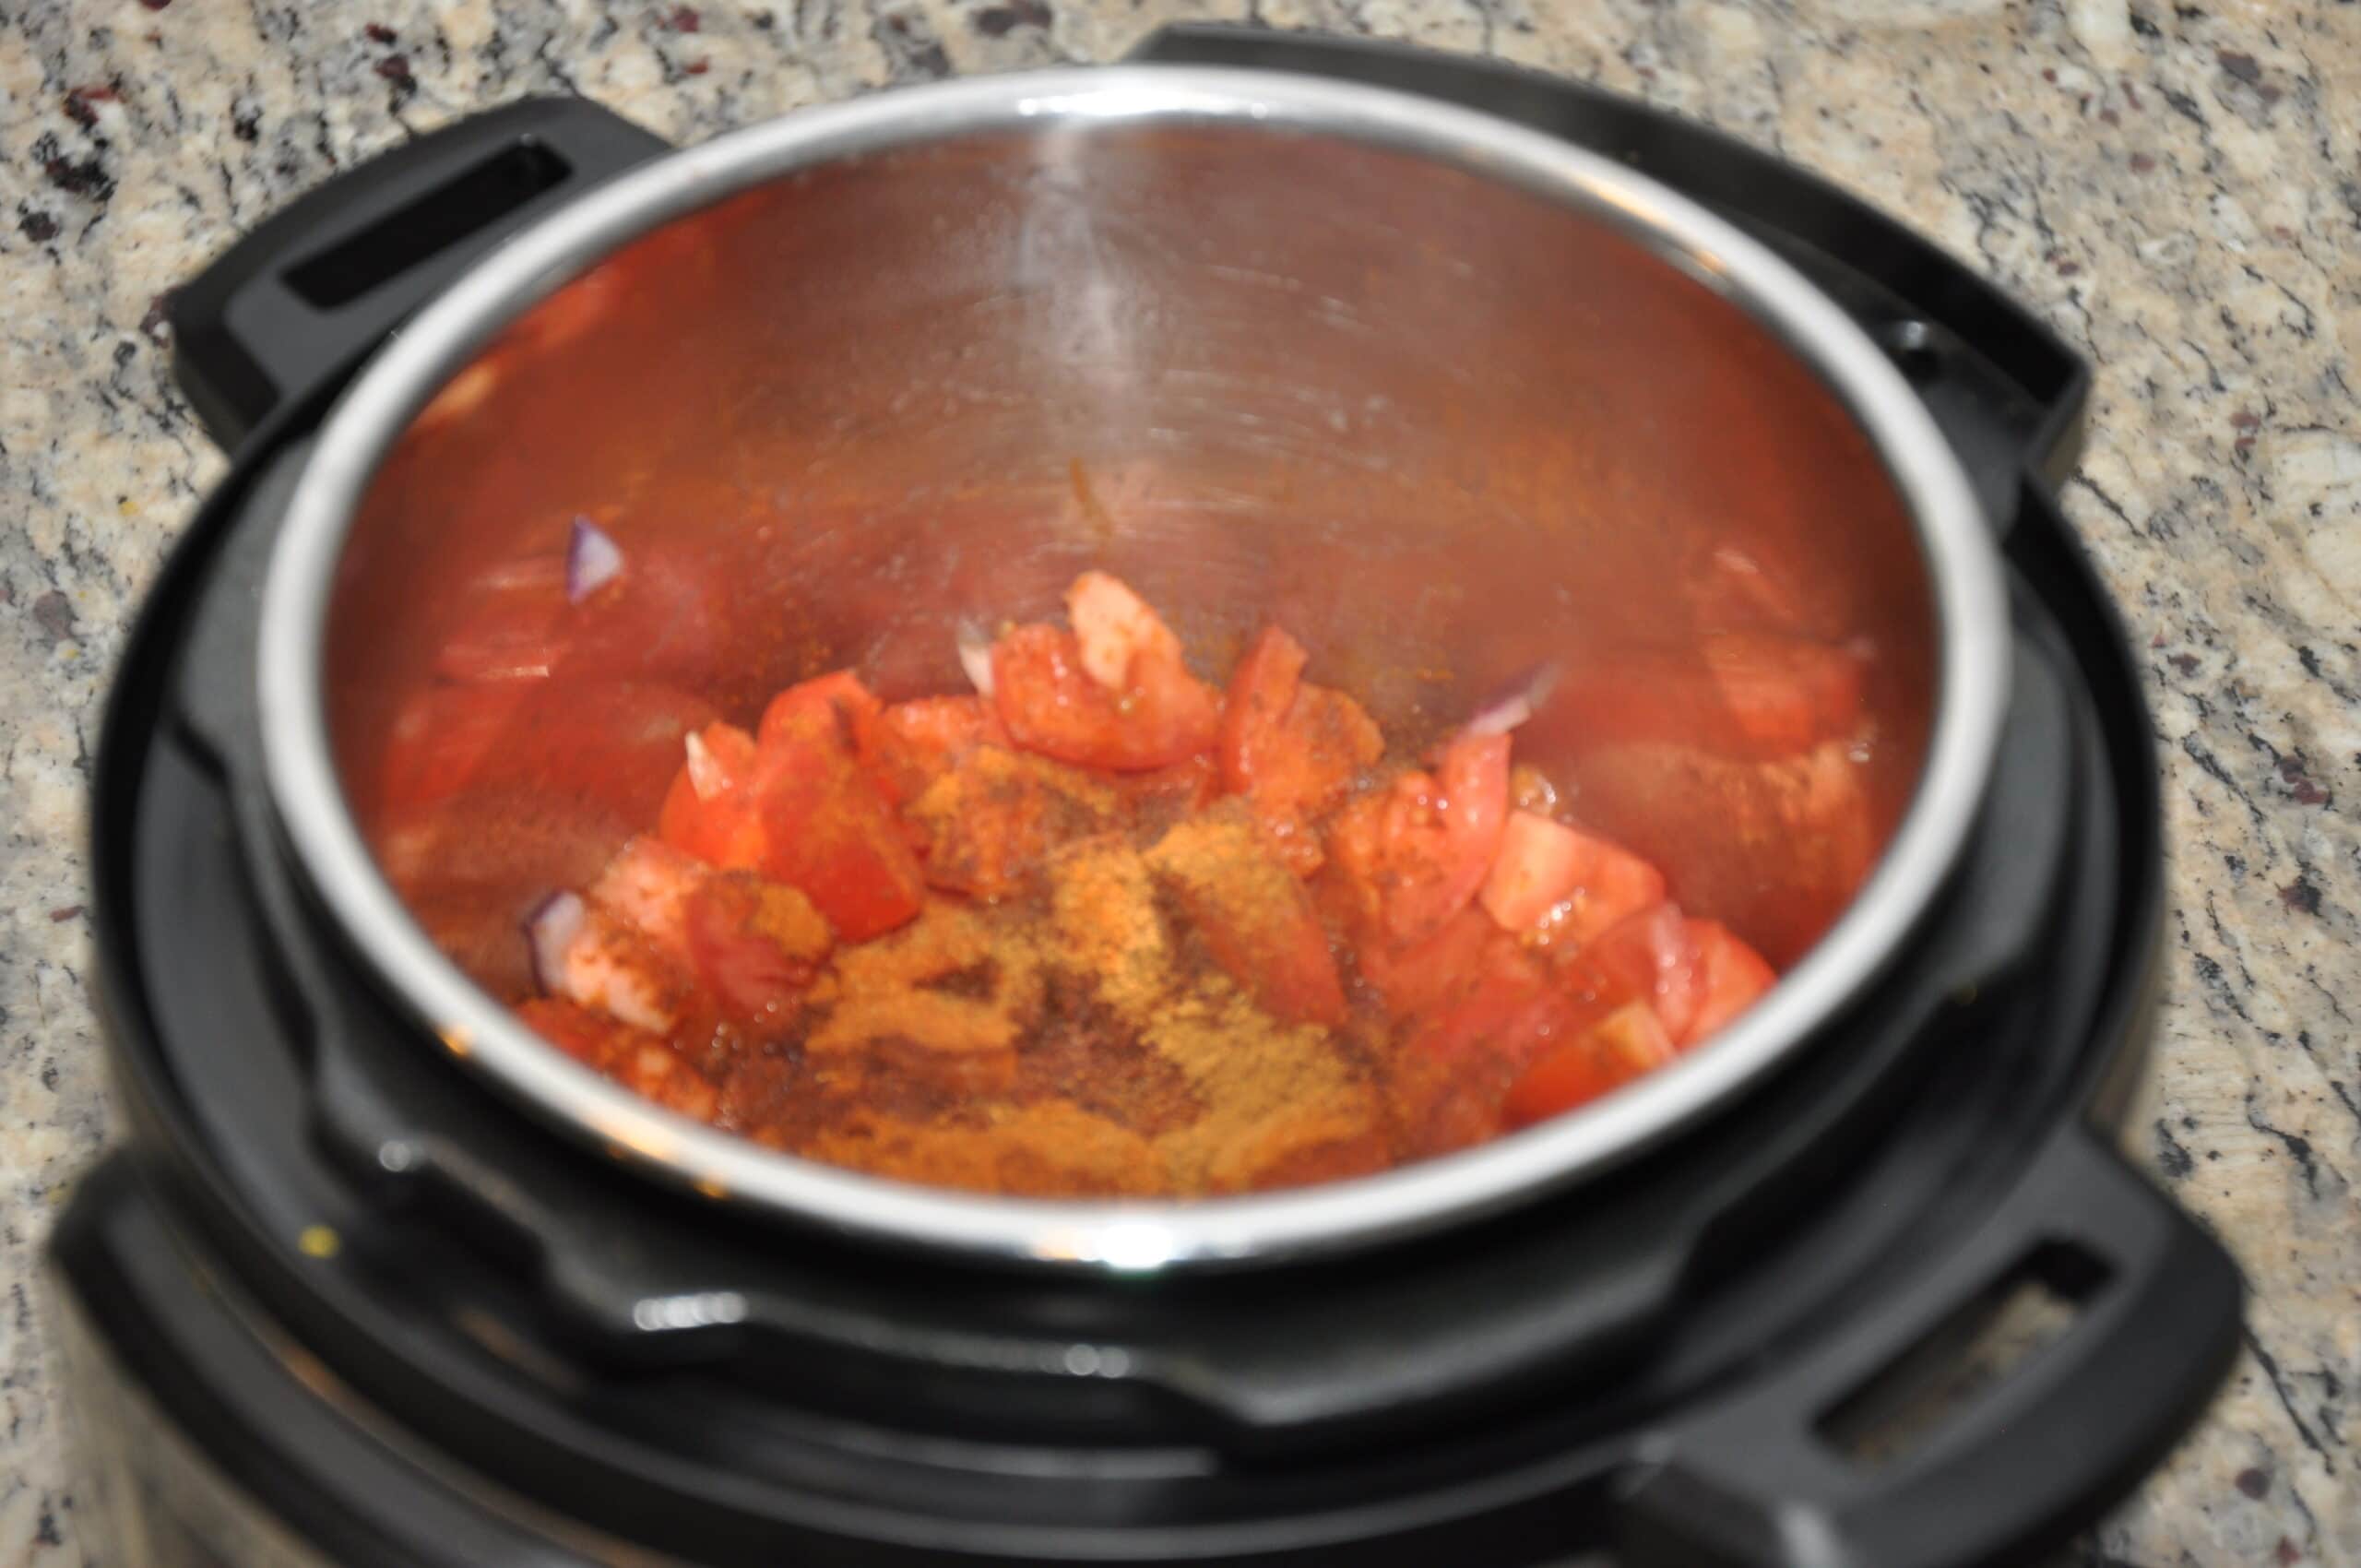 pav bhaji step 1, saute tomato, onion and spices